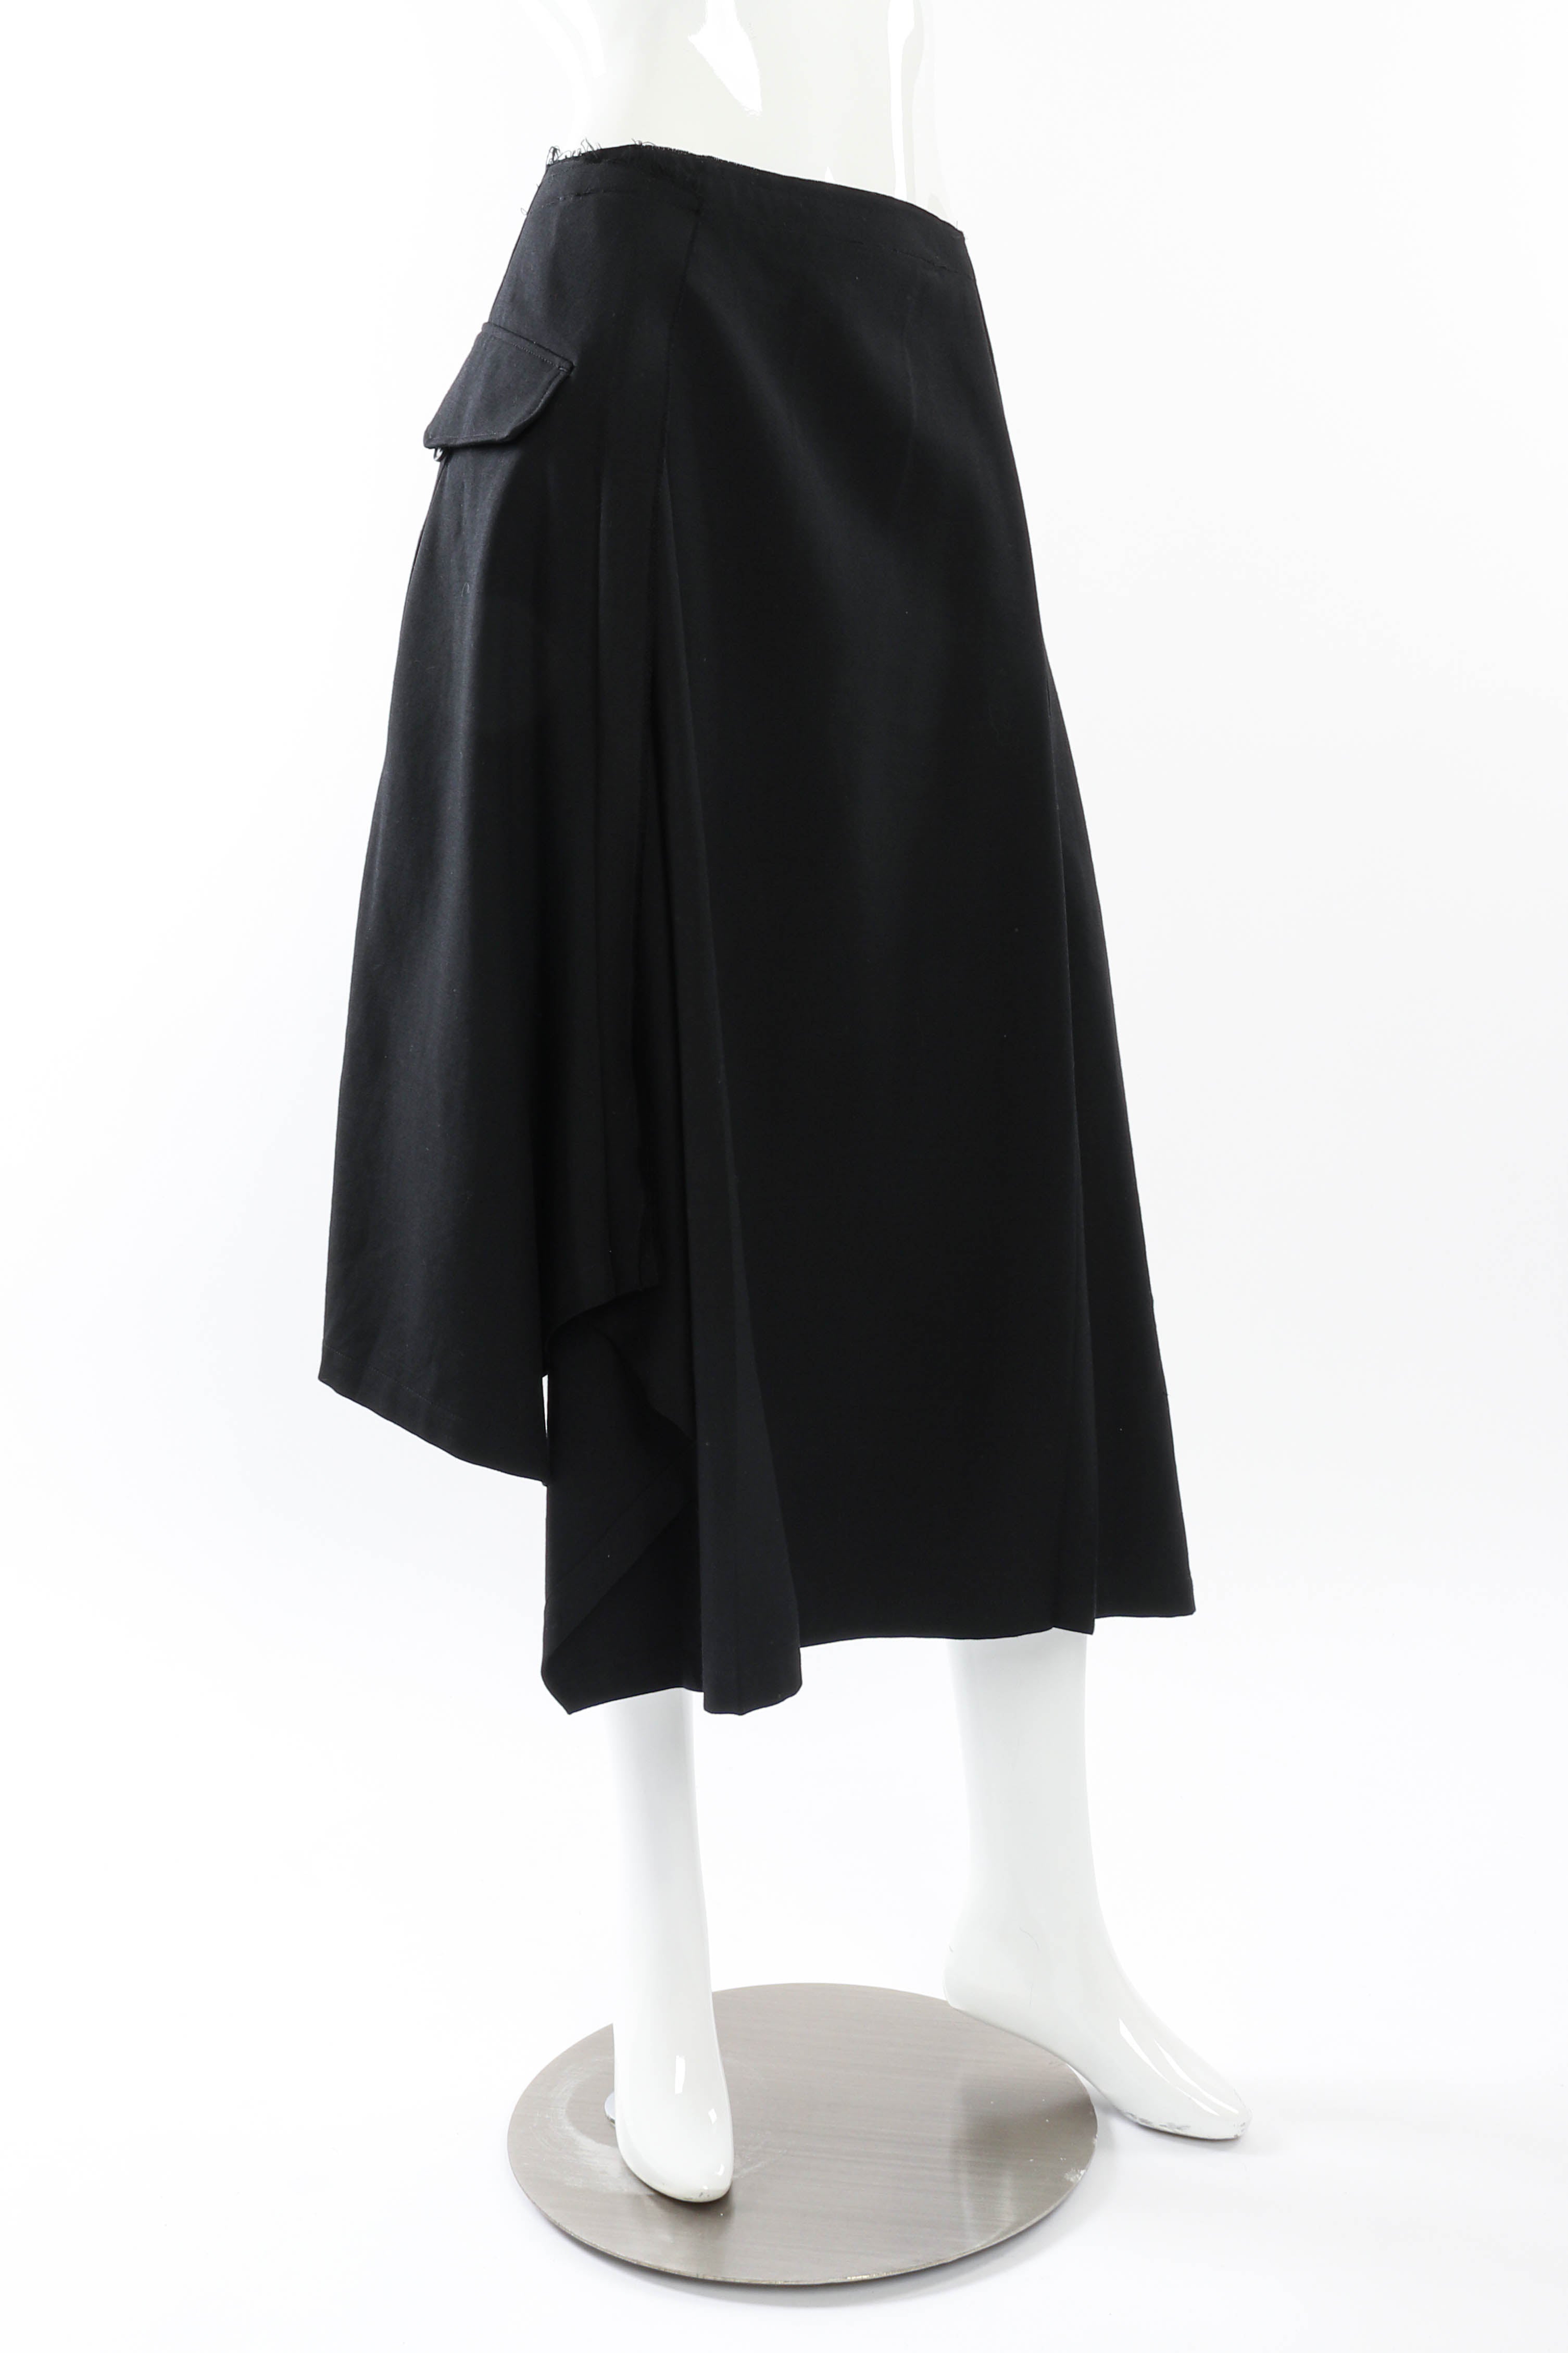 Yohji Yamamoto Asymmetric Hem Skirt 3/4 front on mannequin @recessla 